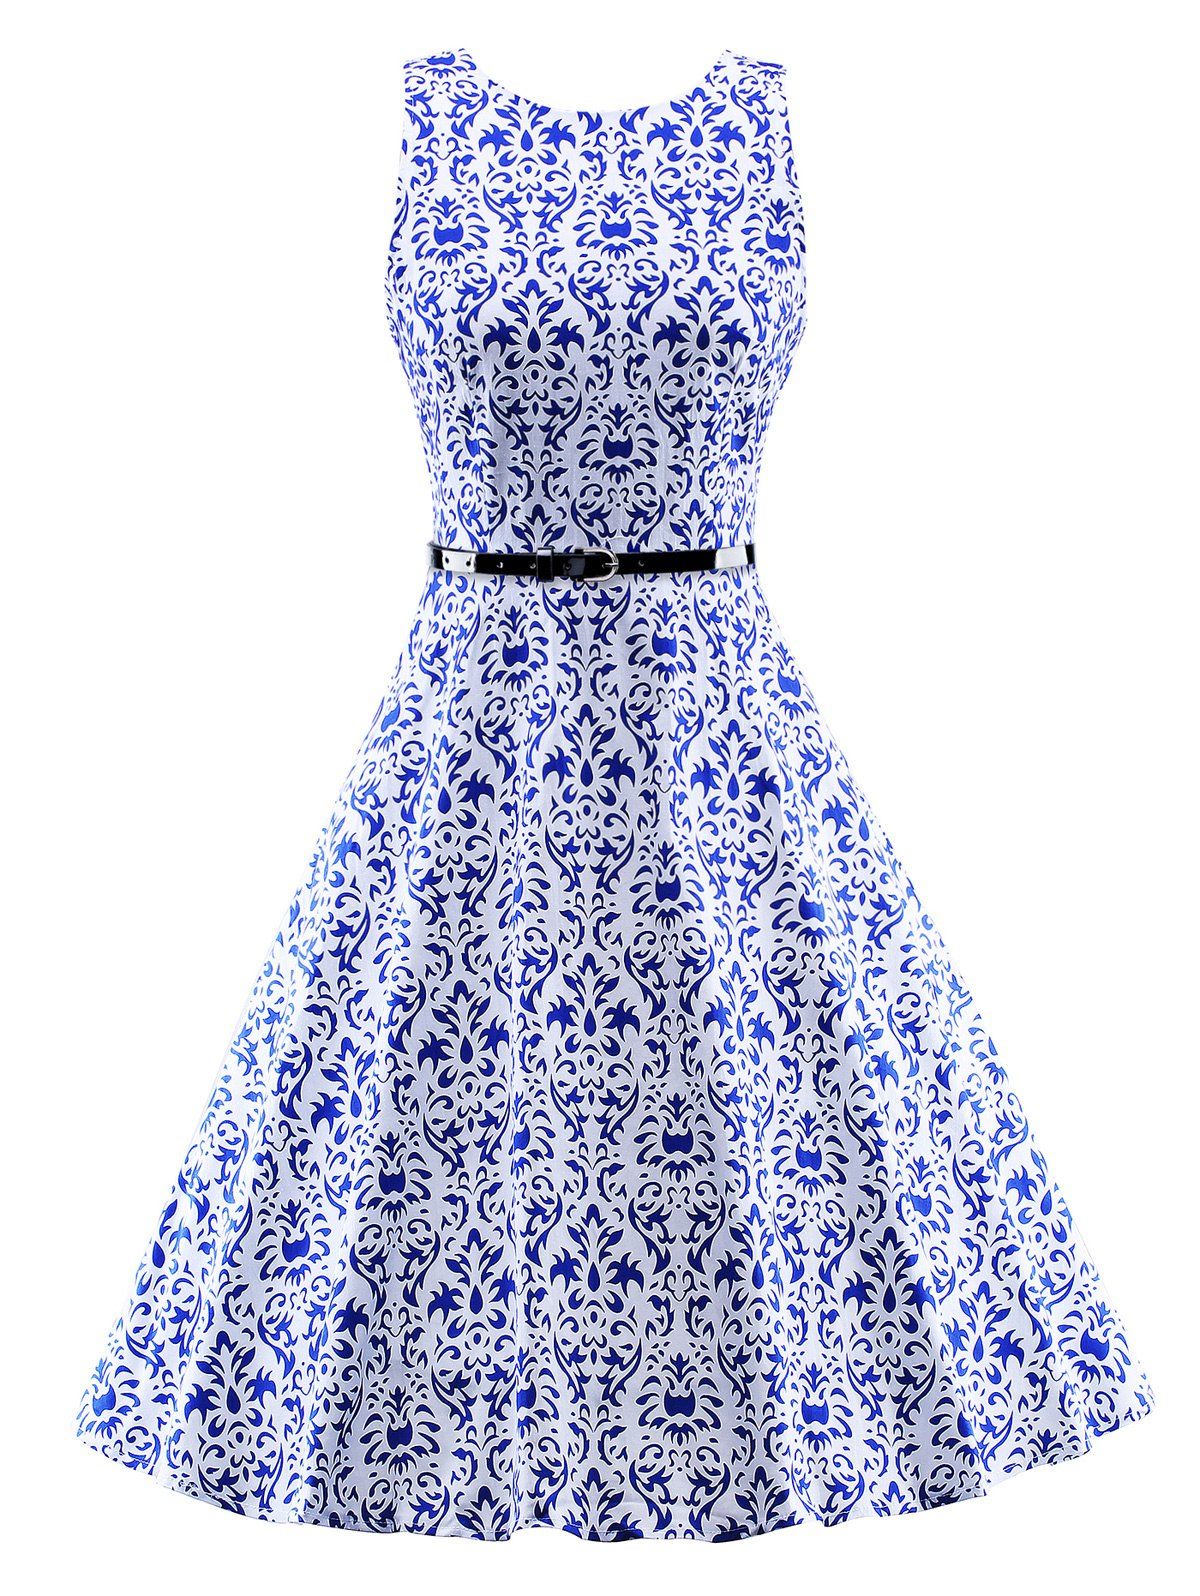 Vintage Sleeveless Swing Dress - BLUE S